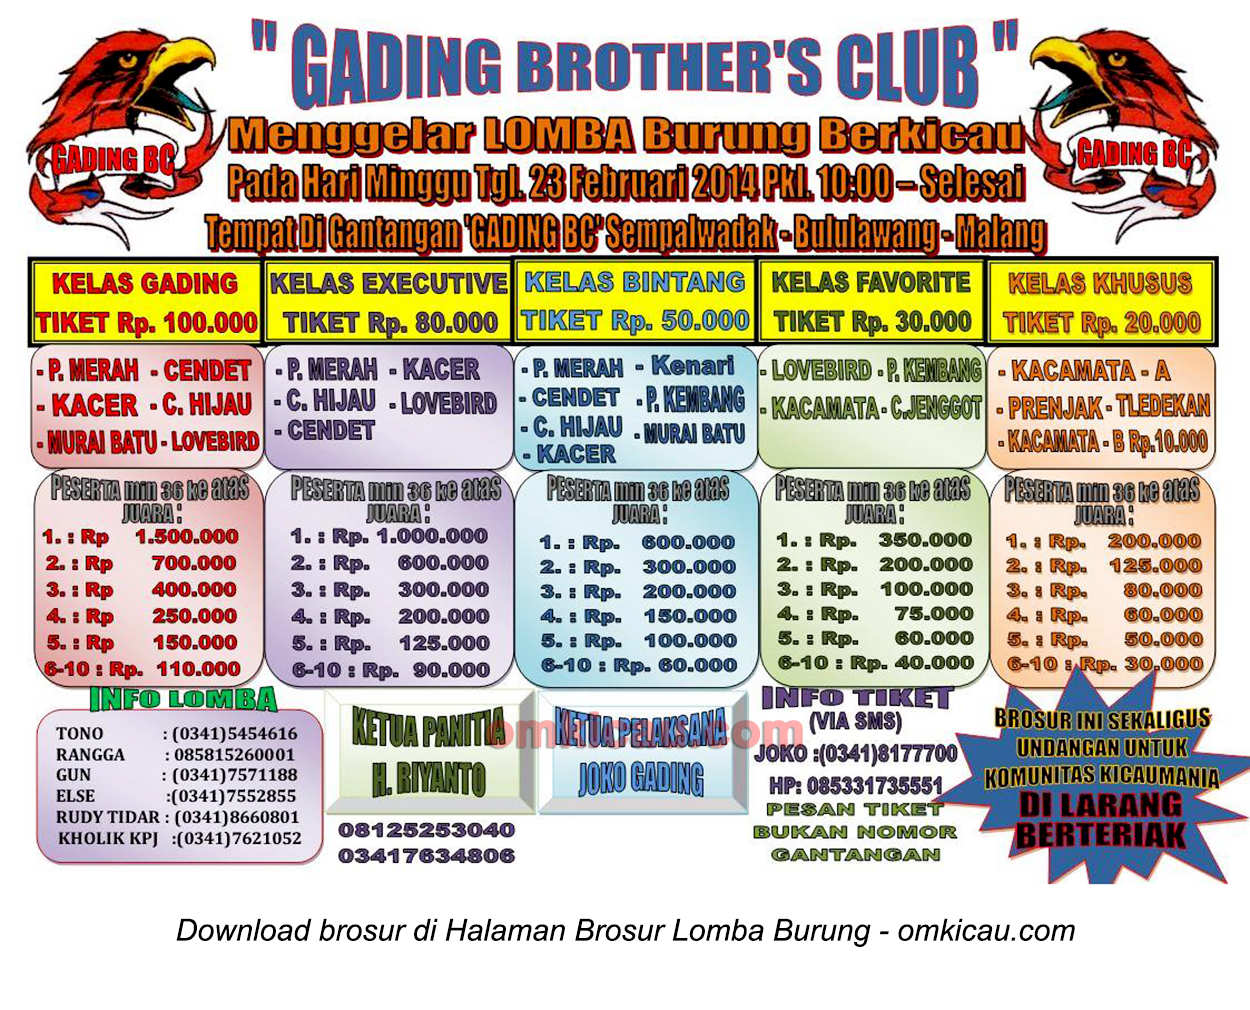 Brosur Lomba Burung Berkicau Gading Brothers Club, Malang, 23 Februari 2015